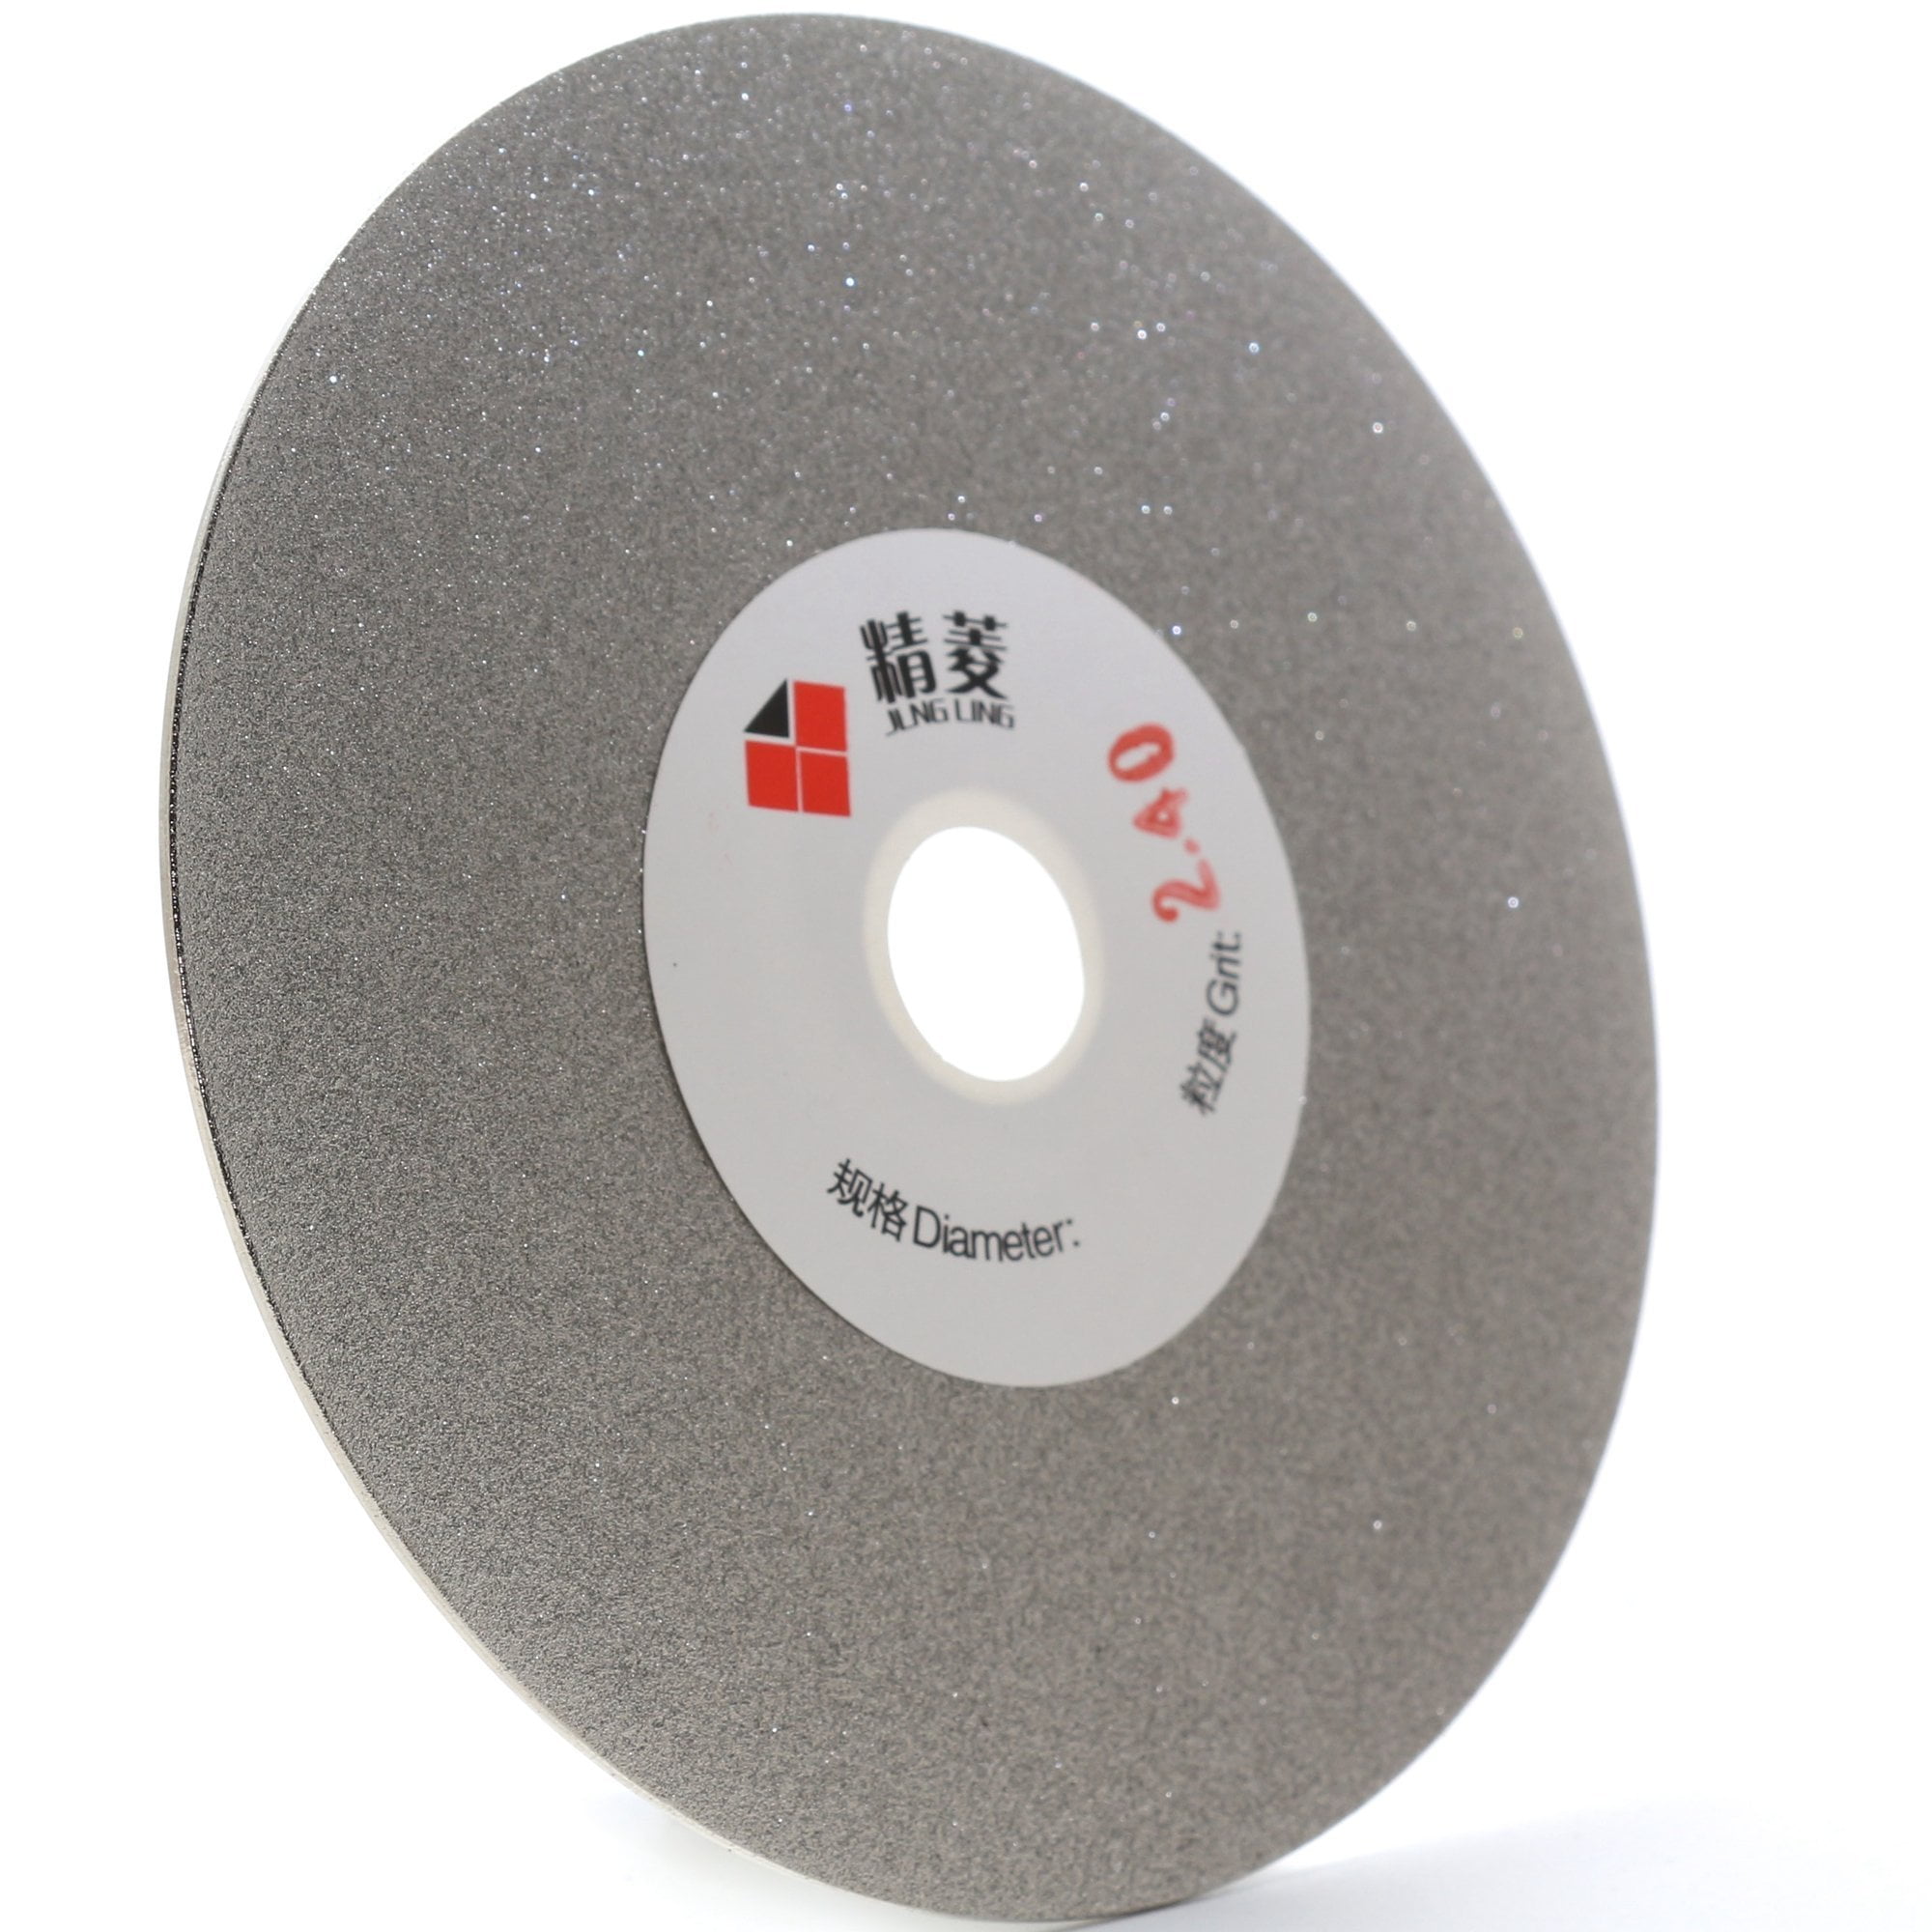 Grit240 Diamond coated 8" inch Flat Lap wheel Lapidary lapping polishing disc 